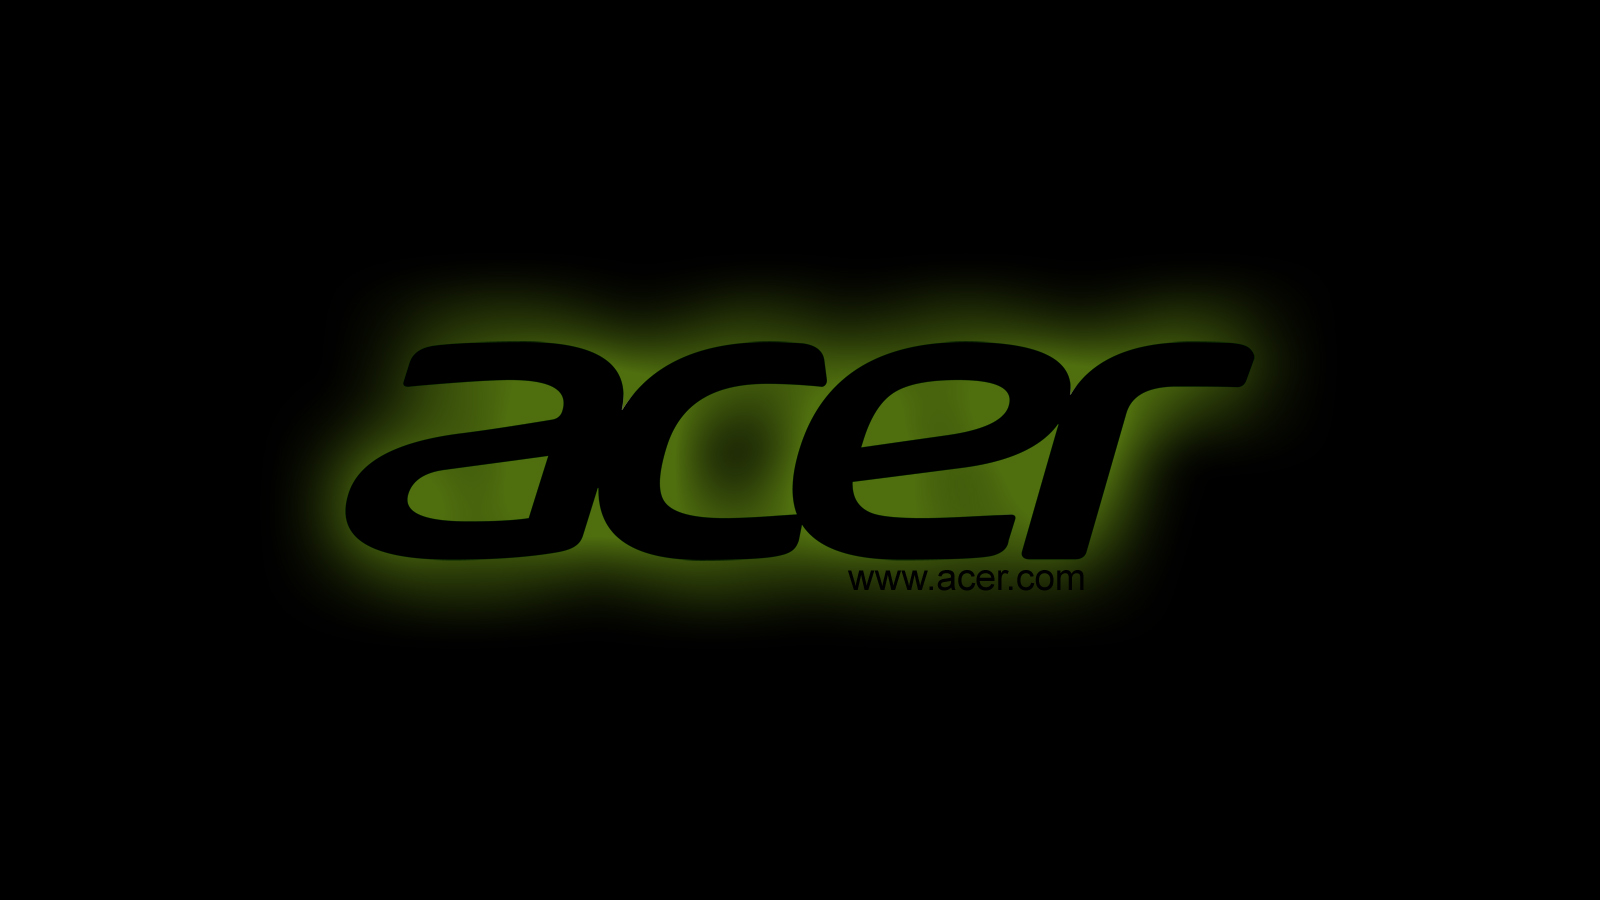 acer Computer Wallpapers Desktop Backgrounds 1600x900 ID444550